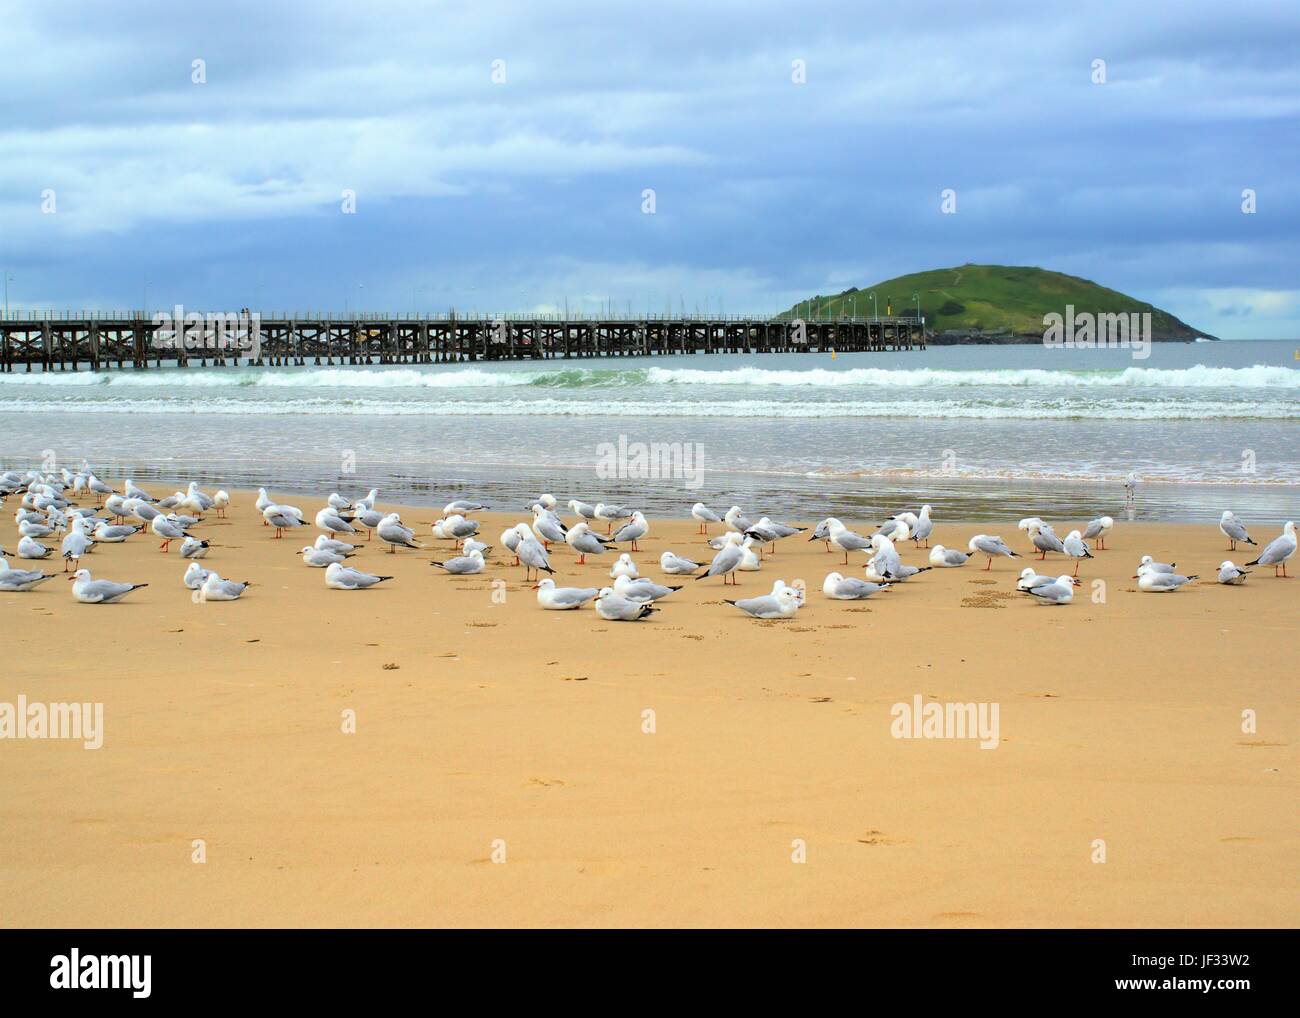 View of seagulls, island and breakwater from beach in Australia, Coffs Harbour, Muttonbird Island, Australian landscape. Stock Photo